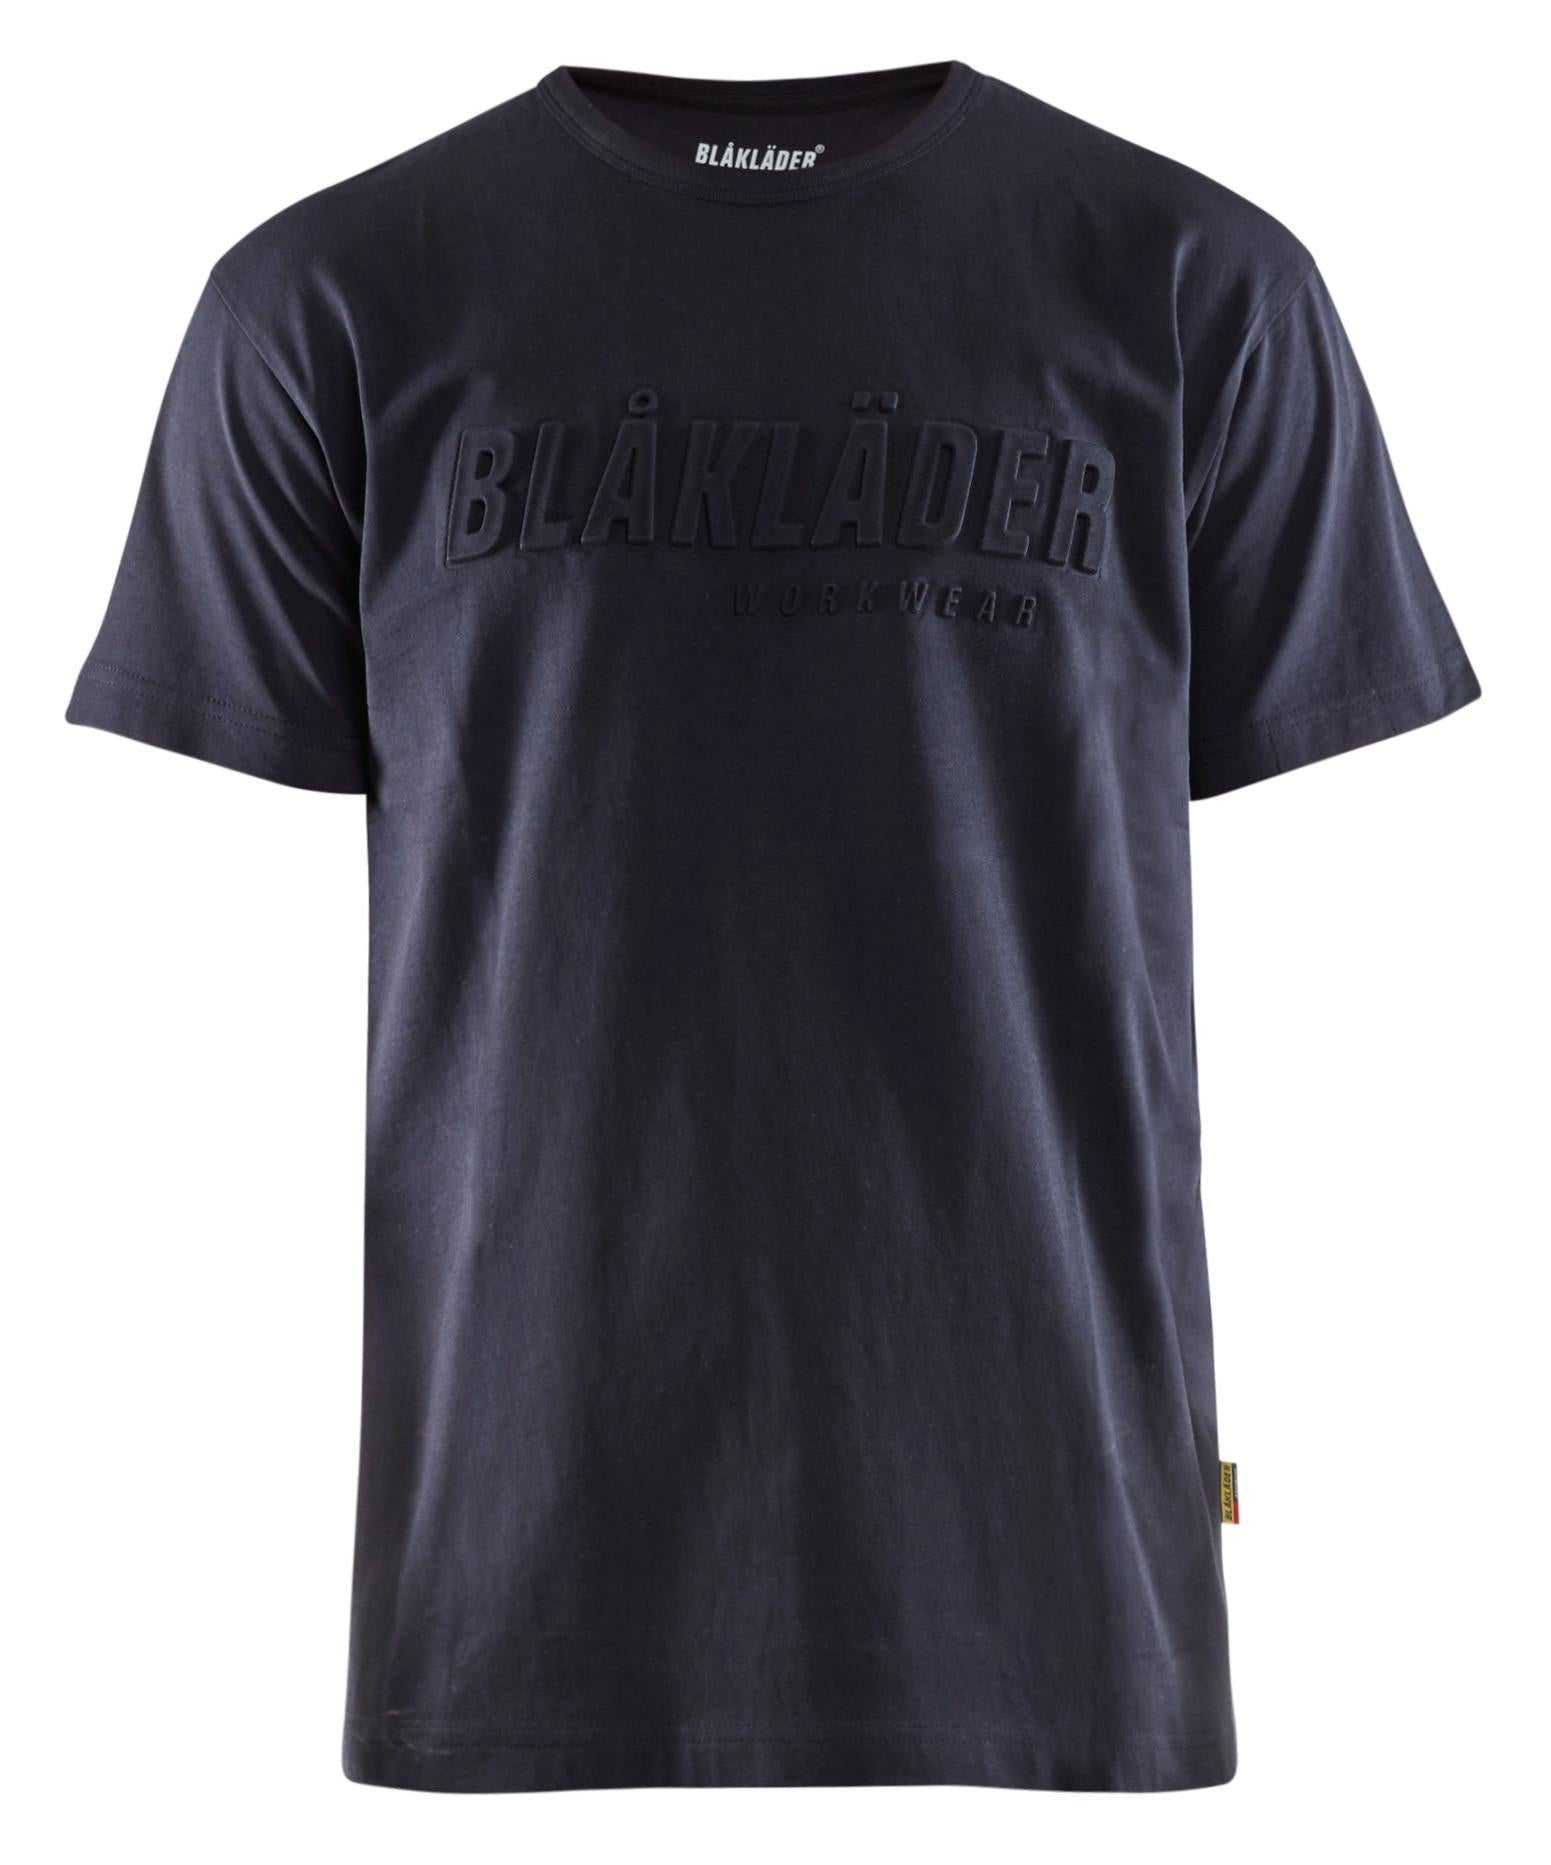 Blaklader 3D-logo dark navy men's cotton short-sleeve T-shirt #3531